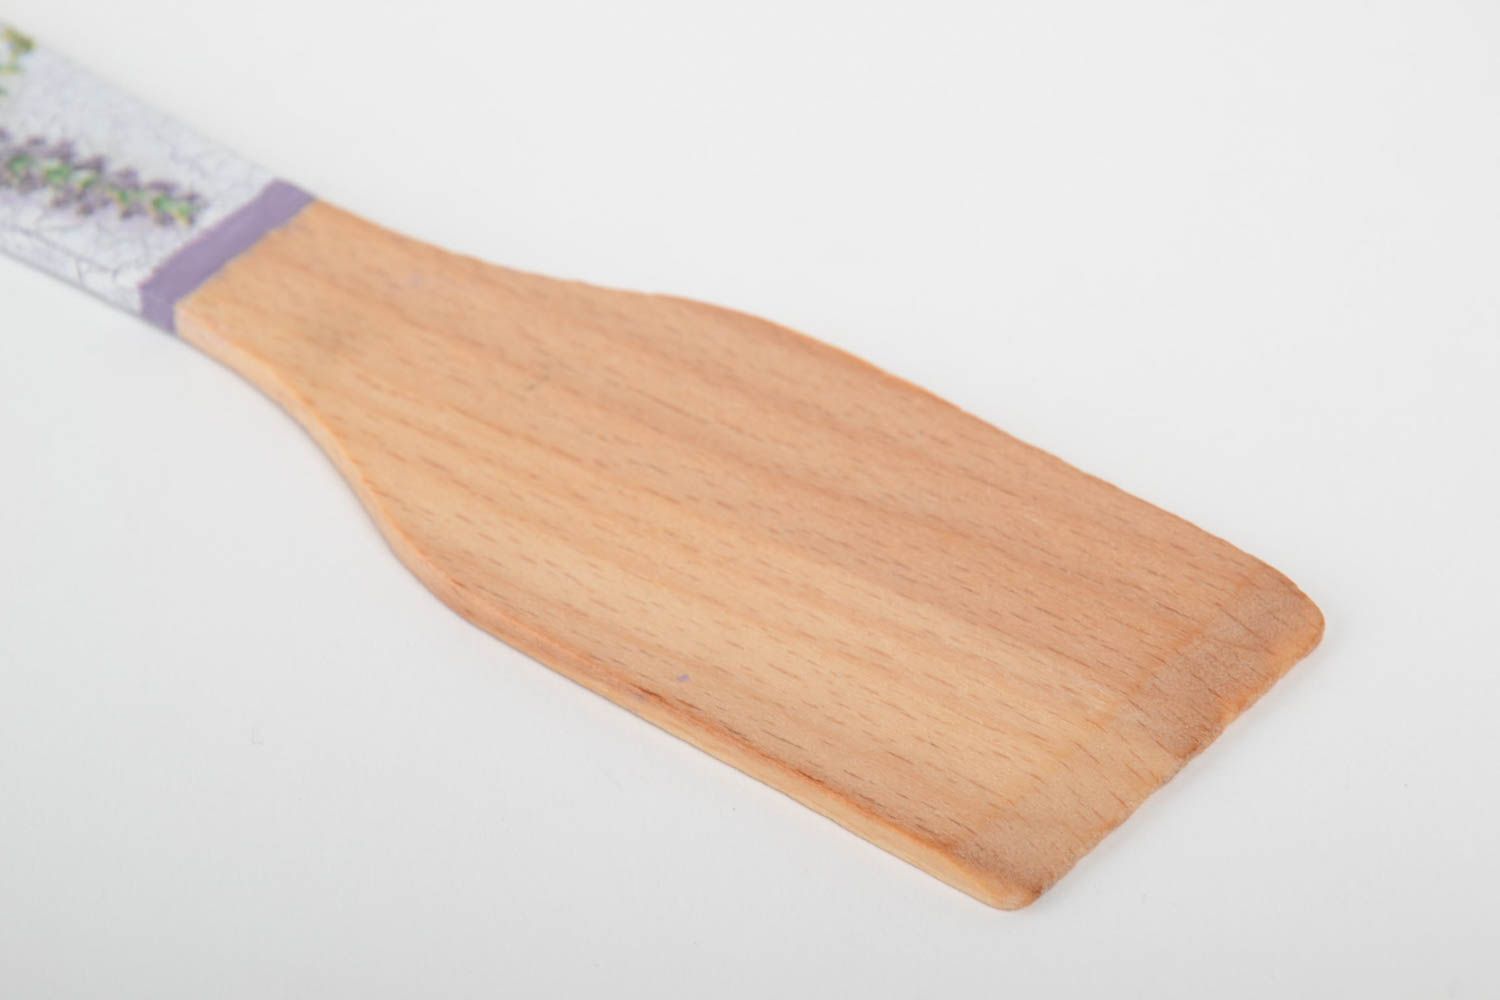 Kitchen spatula wooden stylish home decor designer kitchen utensils photo 3